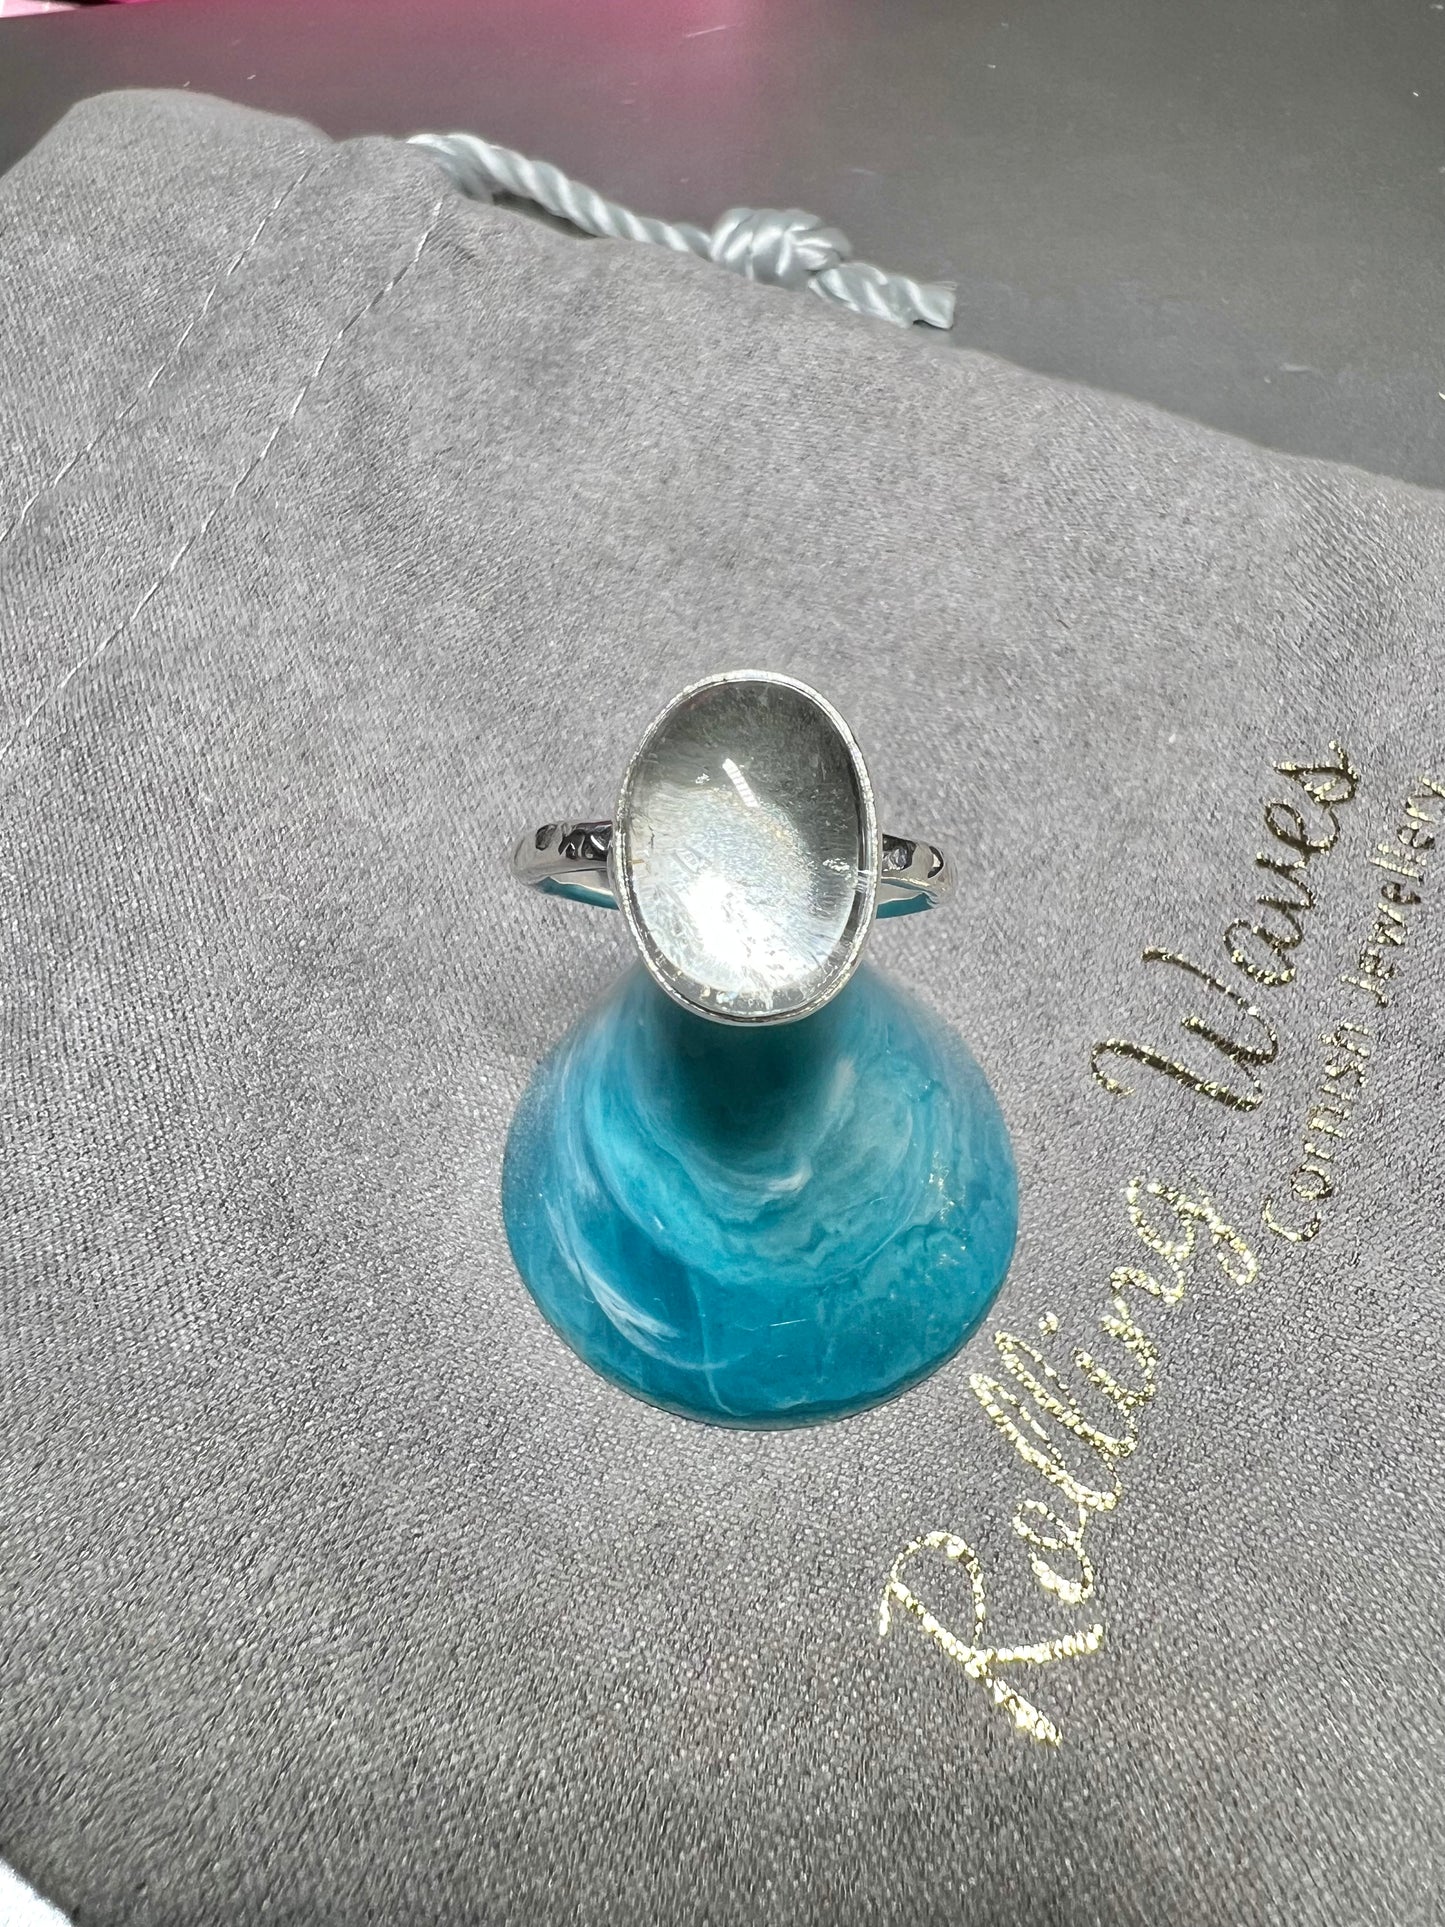 Aqua marine sterling silver ring - size UK M